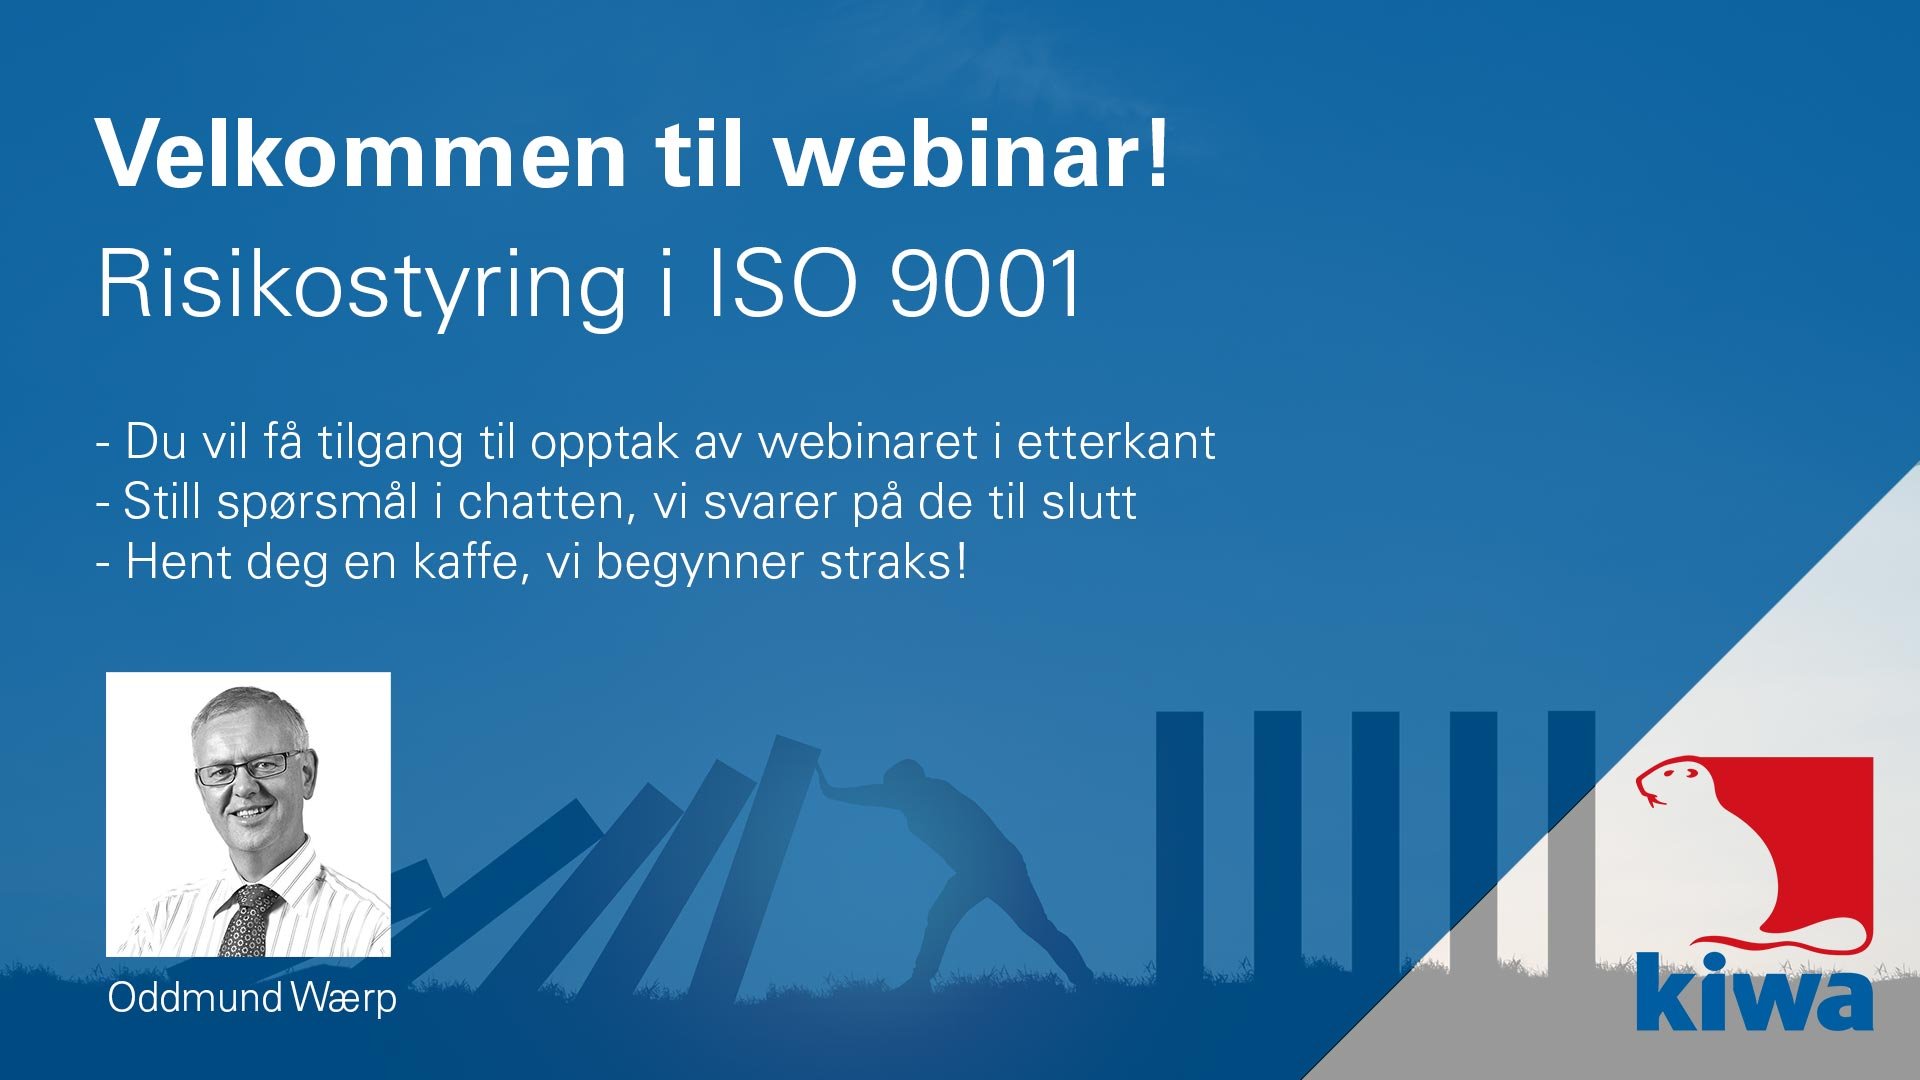 Webinar i Risikostyring i ISO 9001